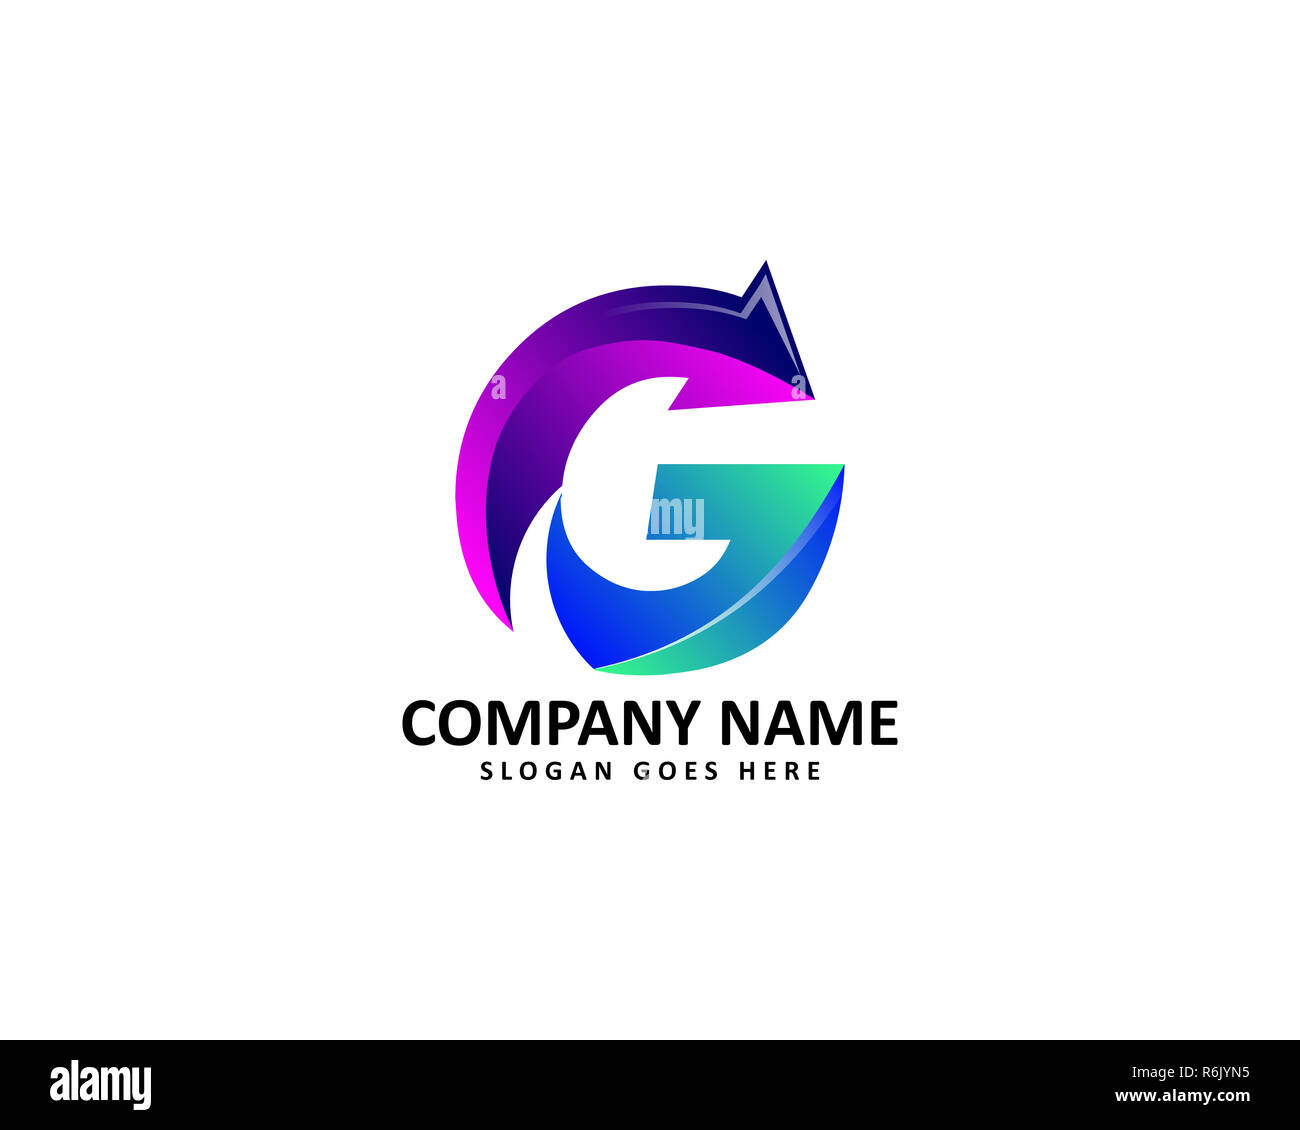 g letter arrow logo Stock Photo - Alamy